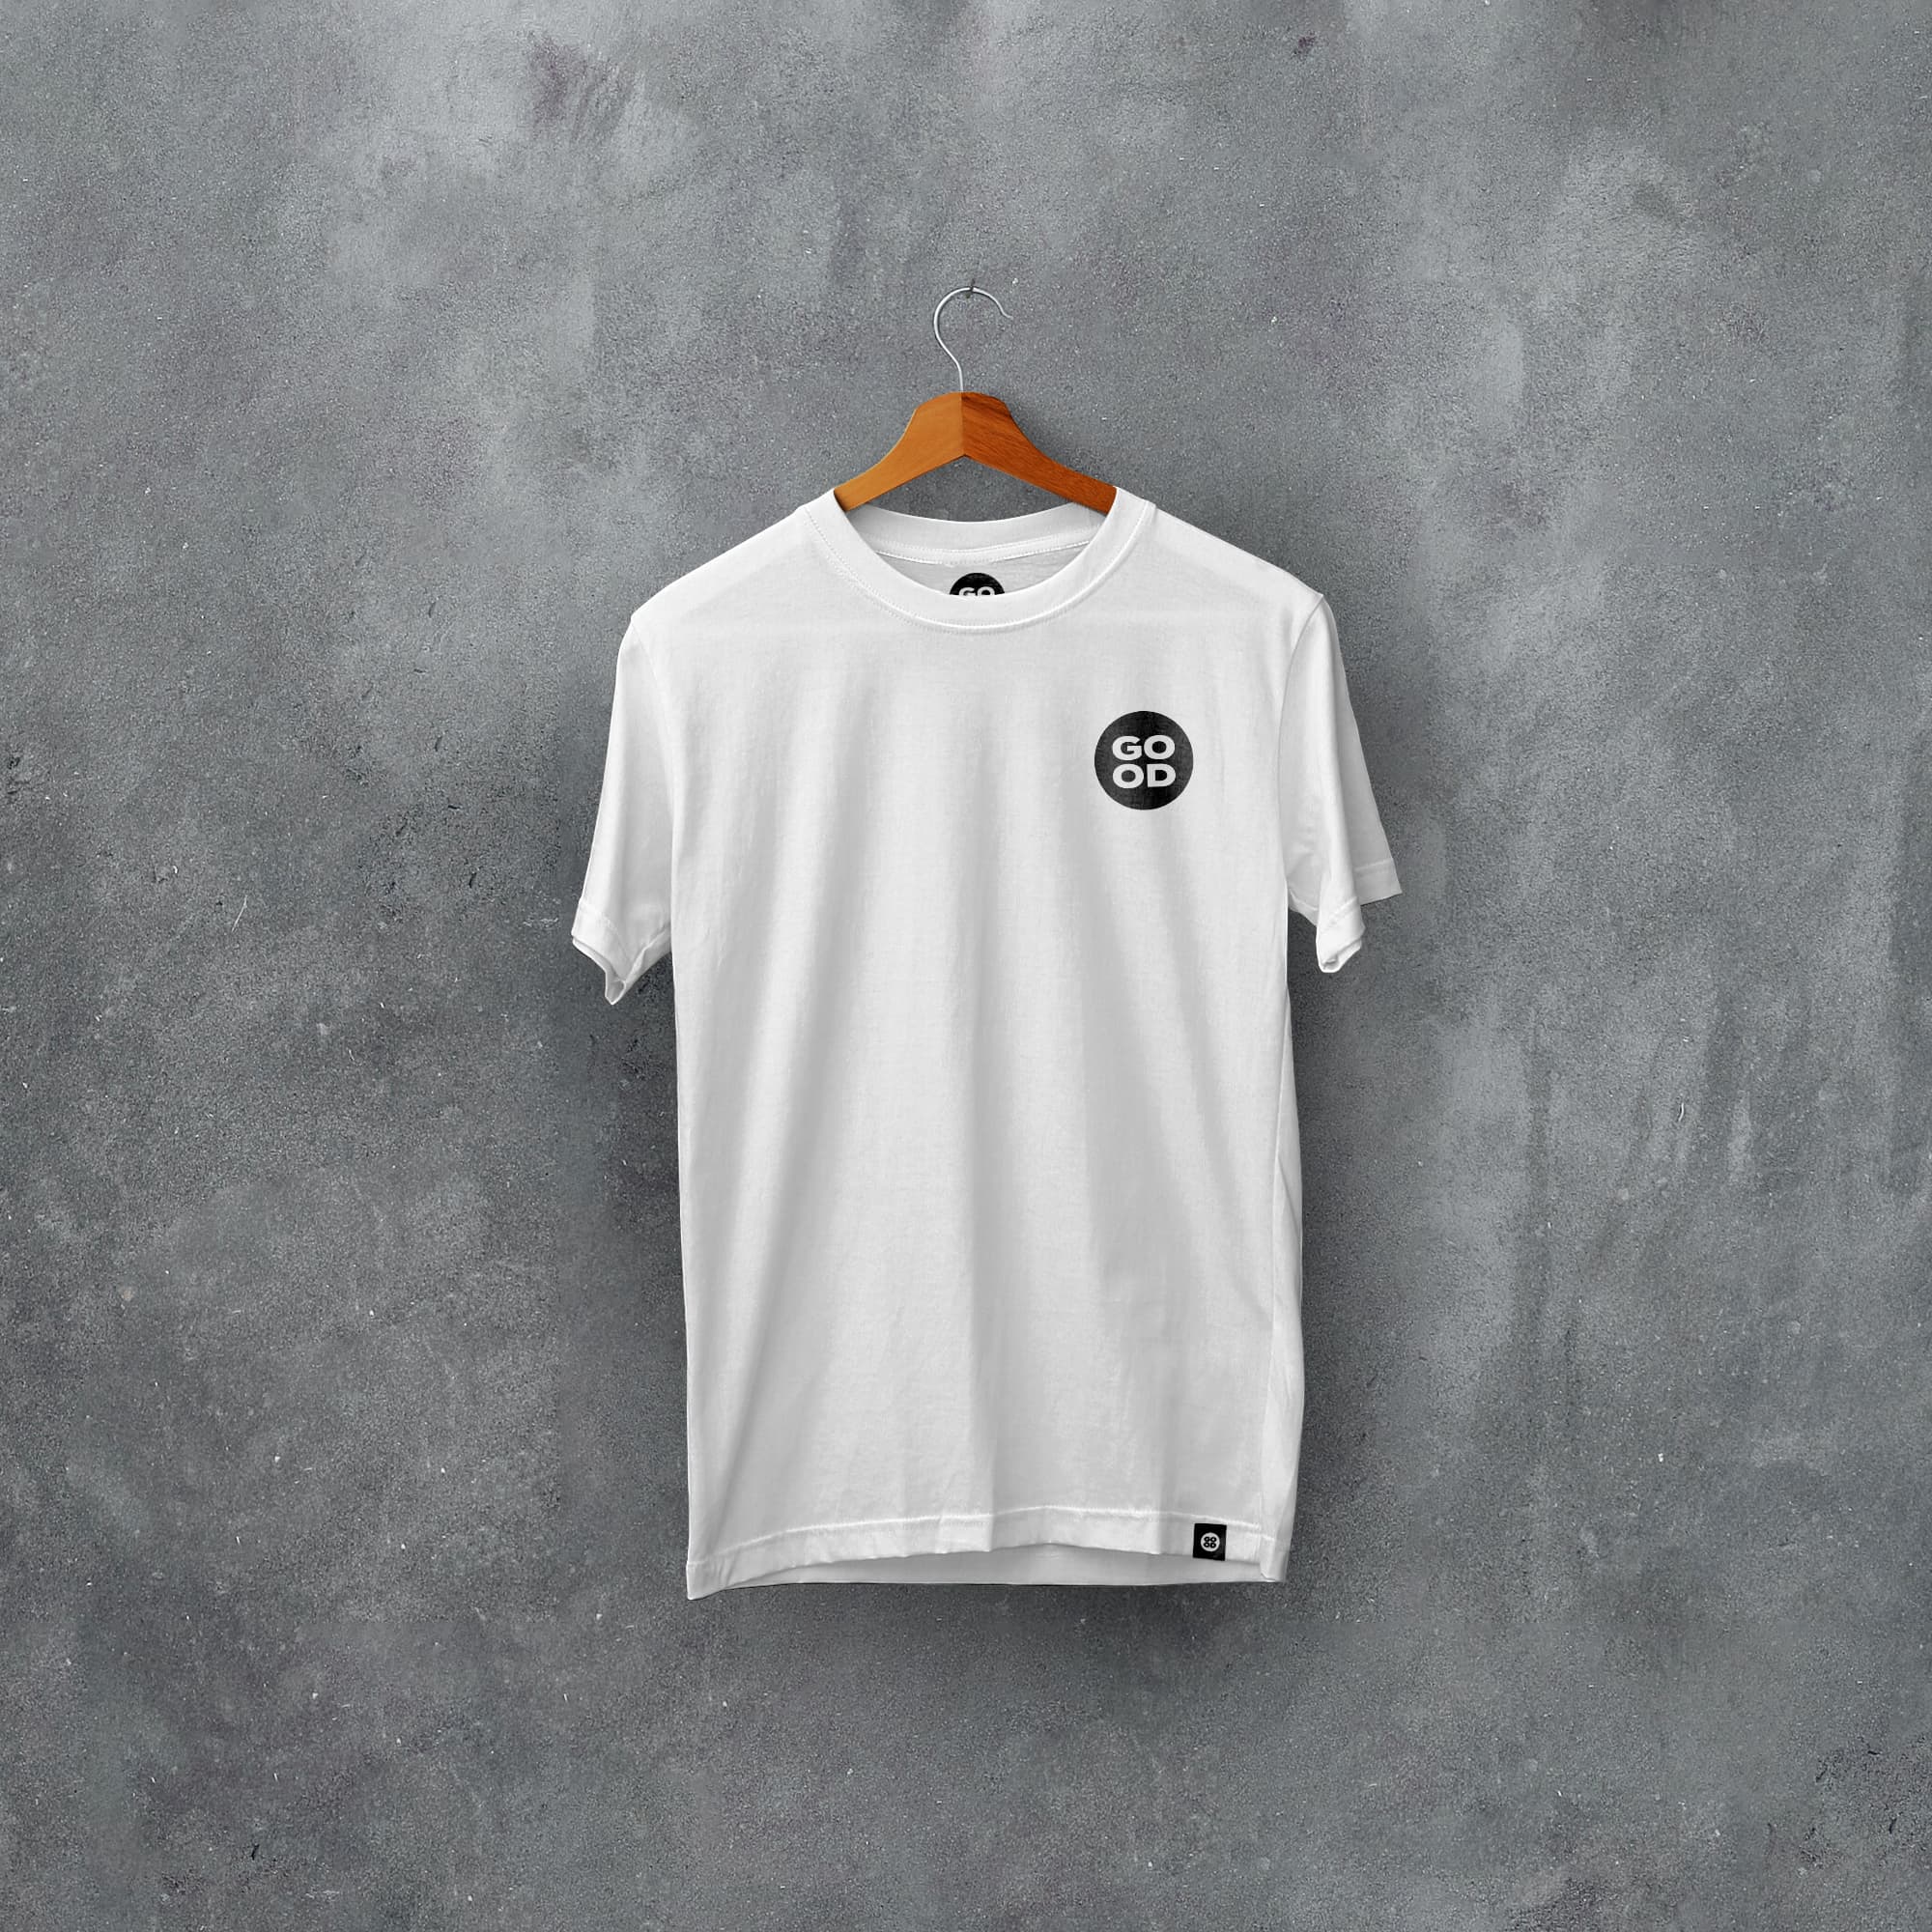 Notts County Classic Kits Football T-Shirt